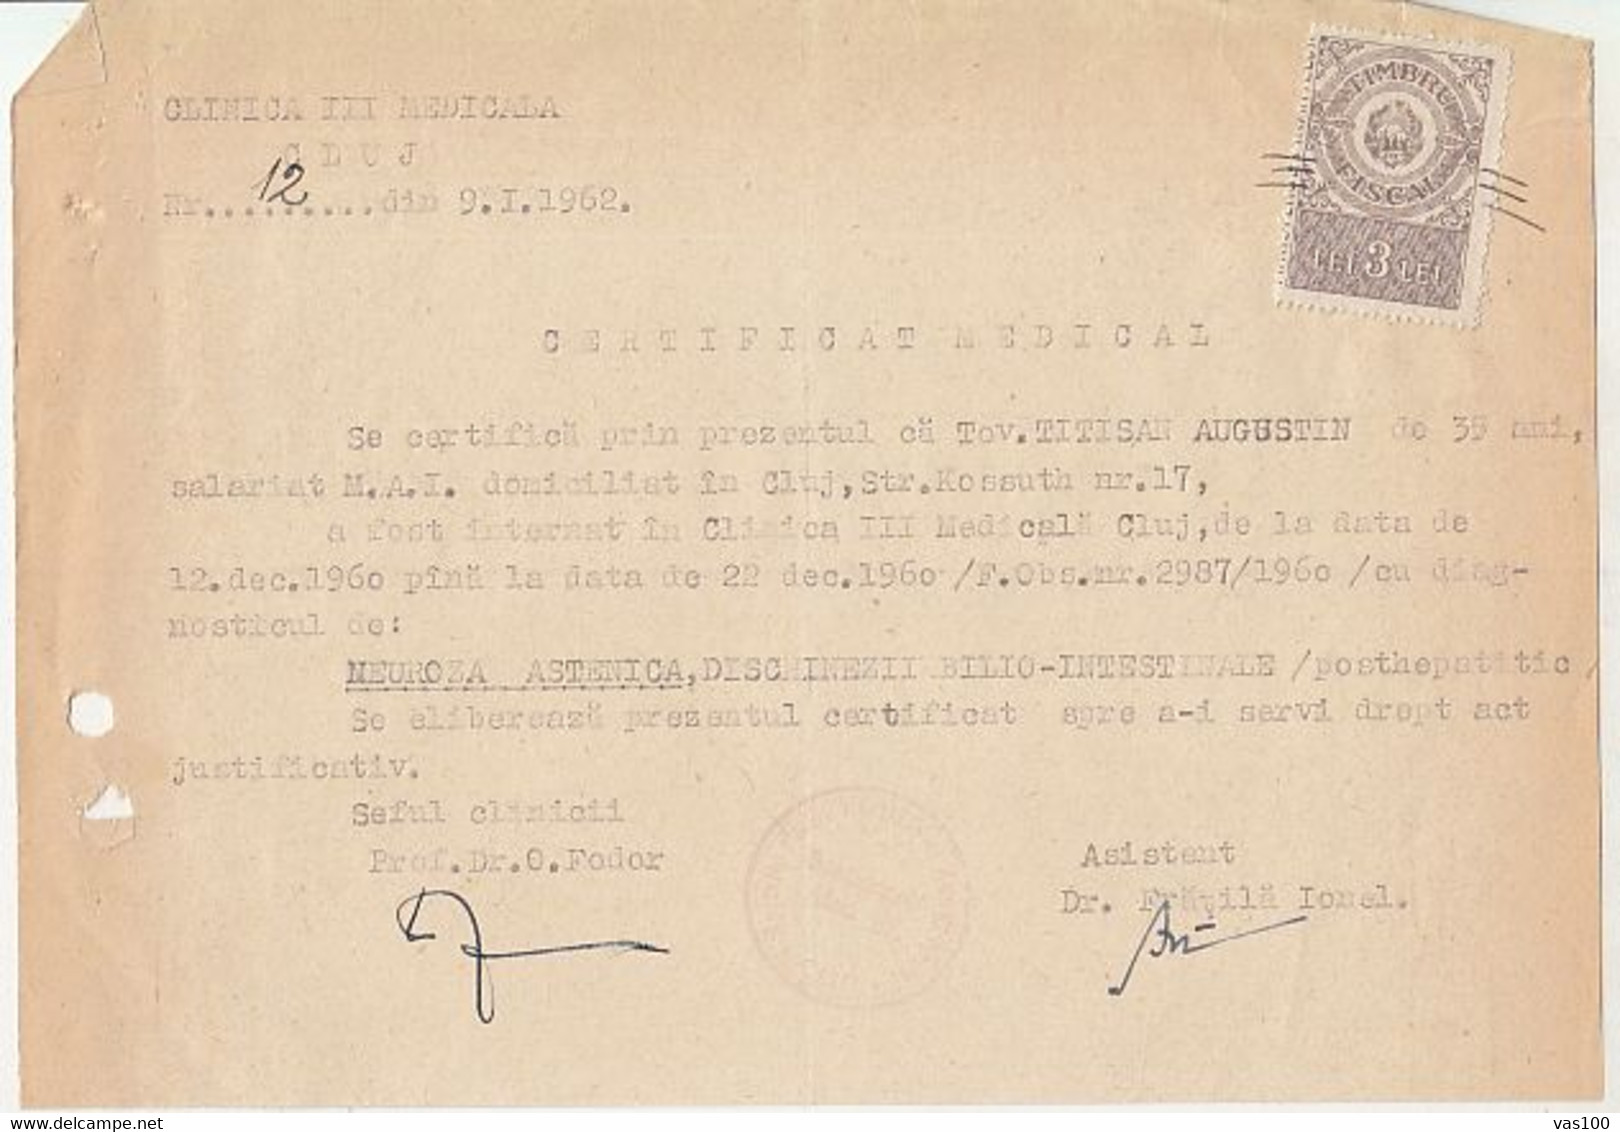 REVENUE STAMP ON MEDICAL CERTIFICATE, 1962, ROMANIA - Revenue Stamps